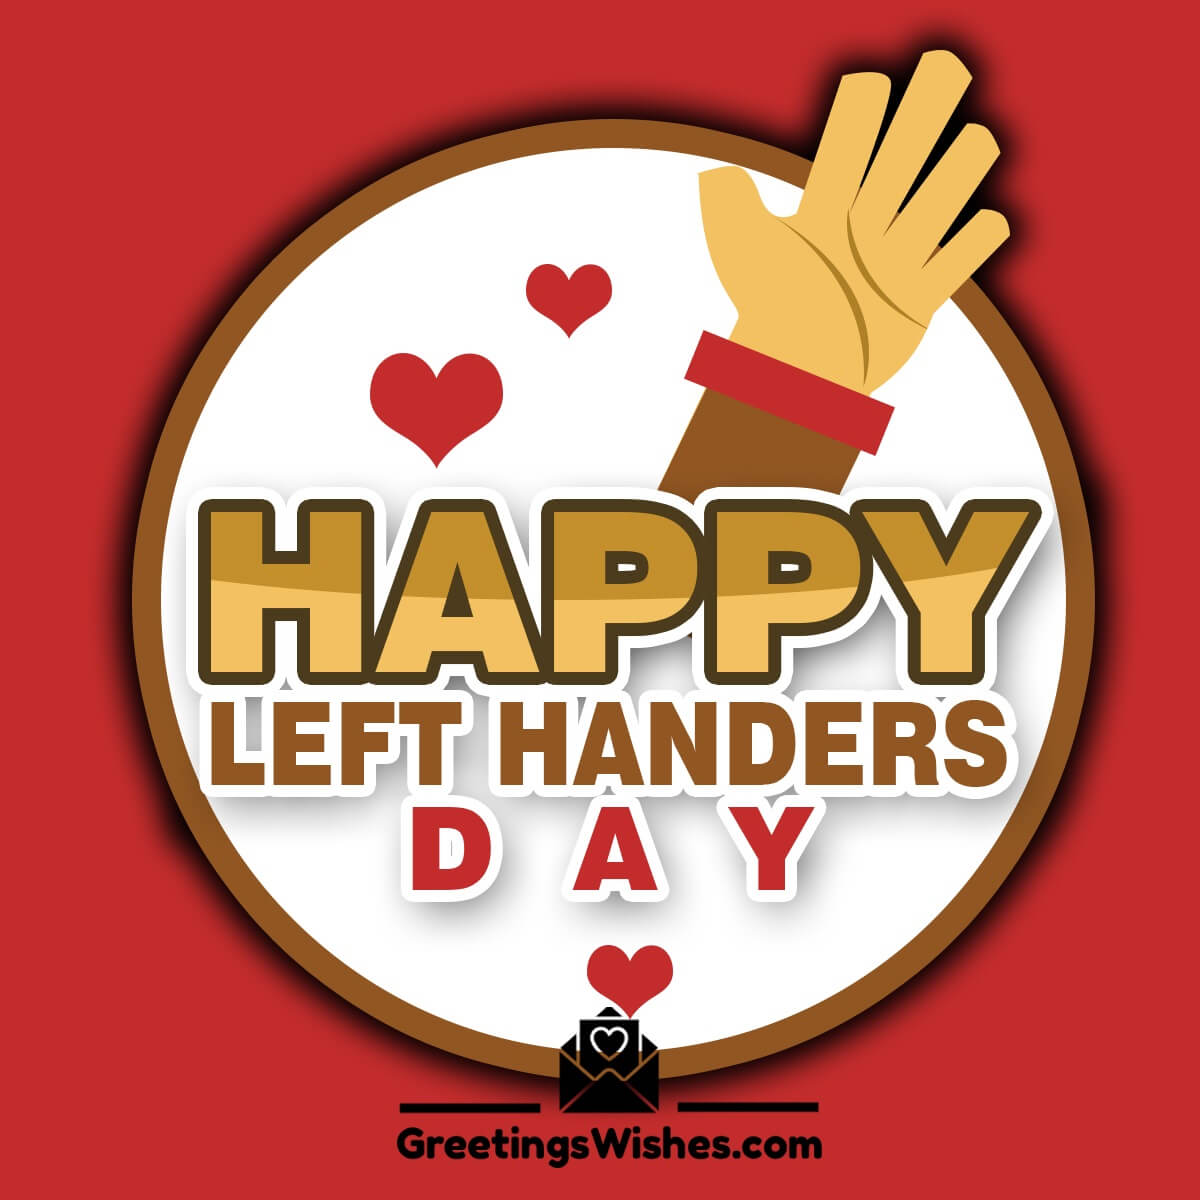 Happy International Left Handers Day